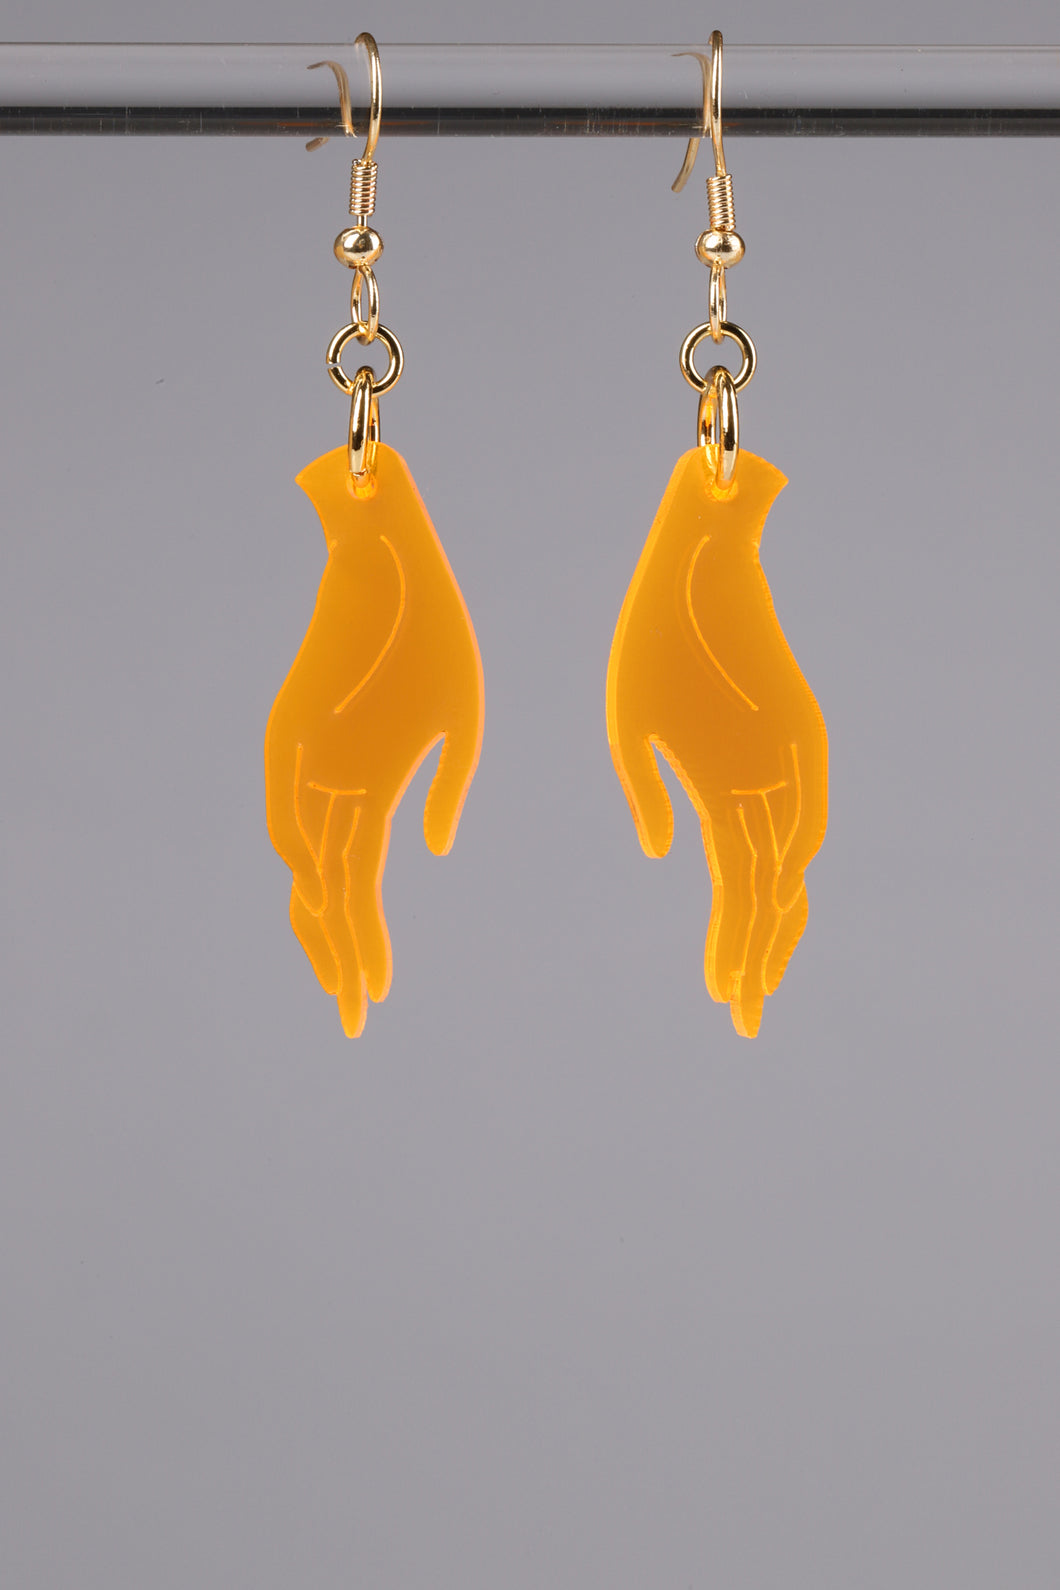 Small Hand Earrings - Neon Orange